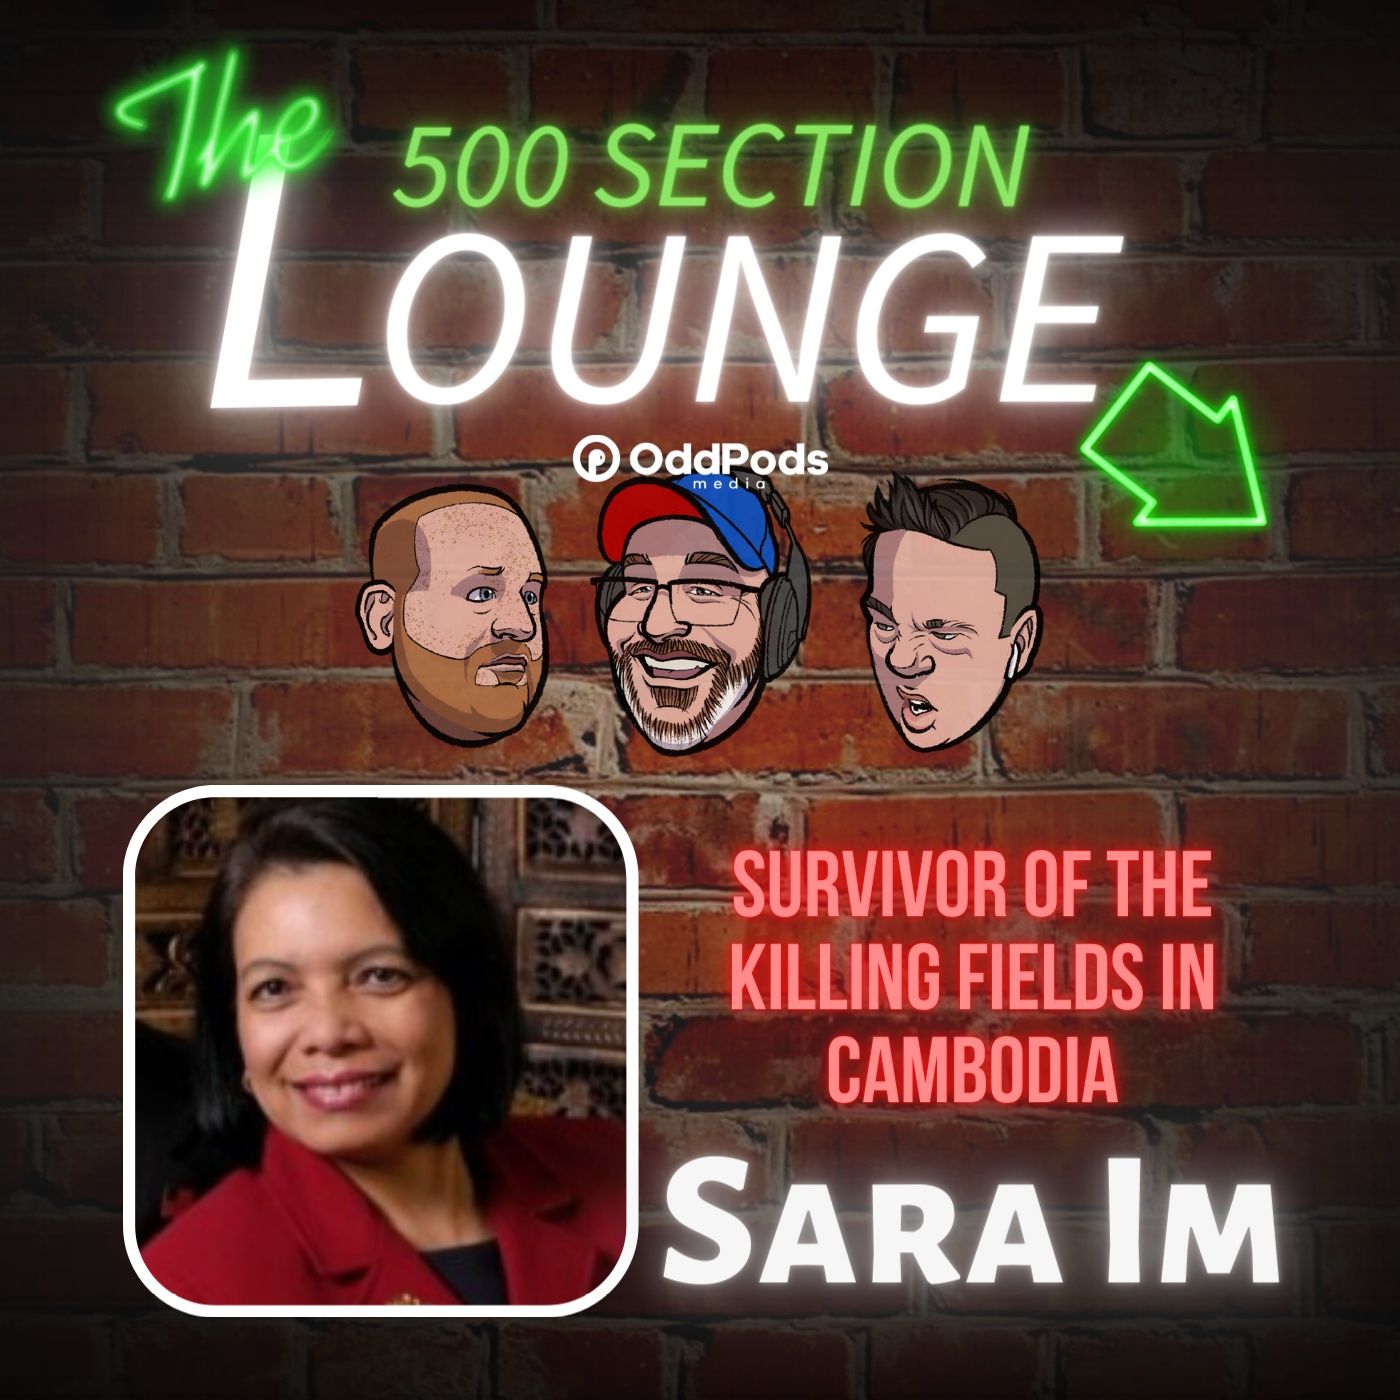 E112: Sara Im Enlightens the Lounge Image